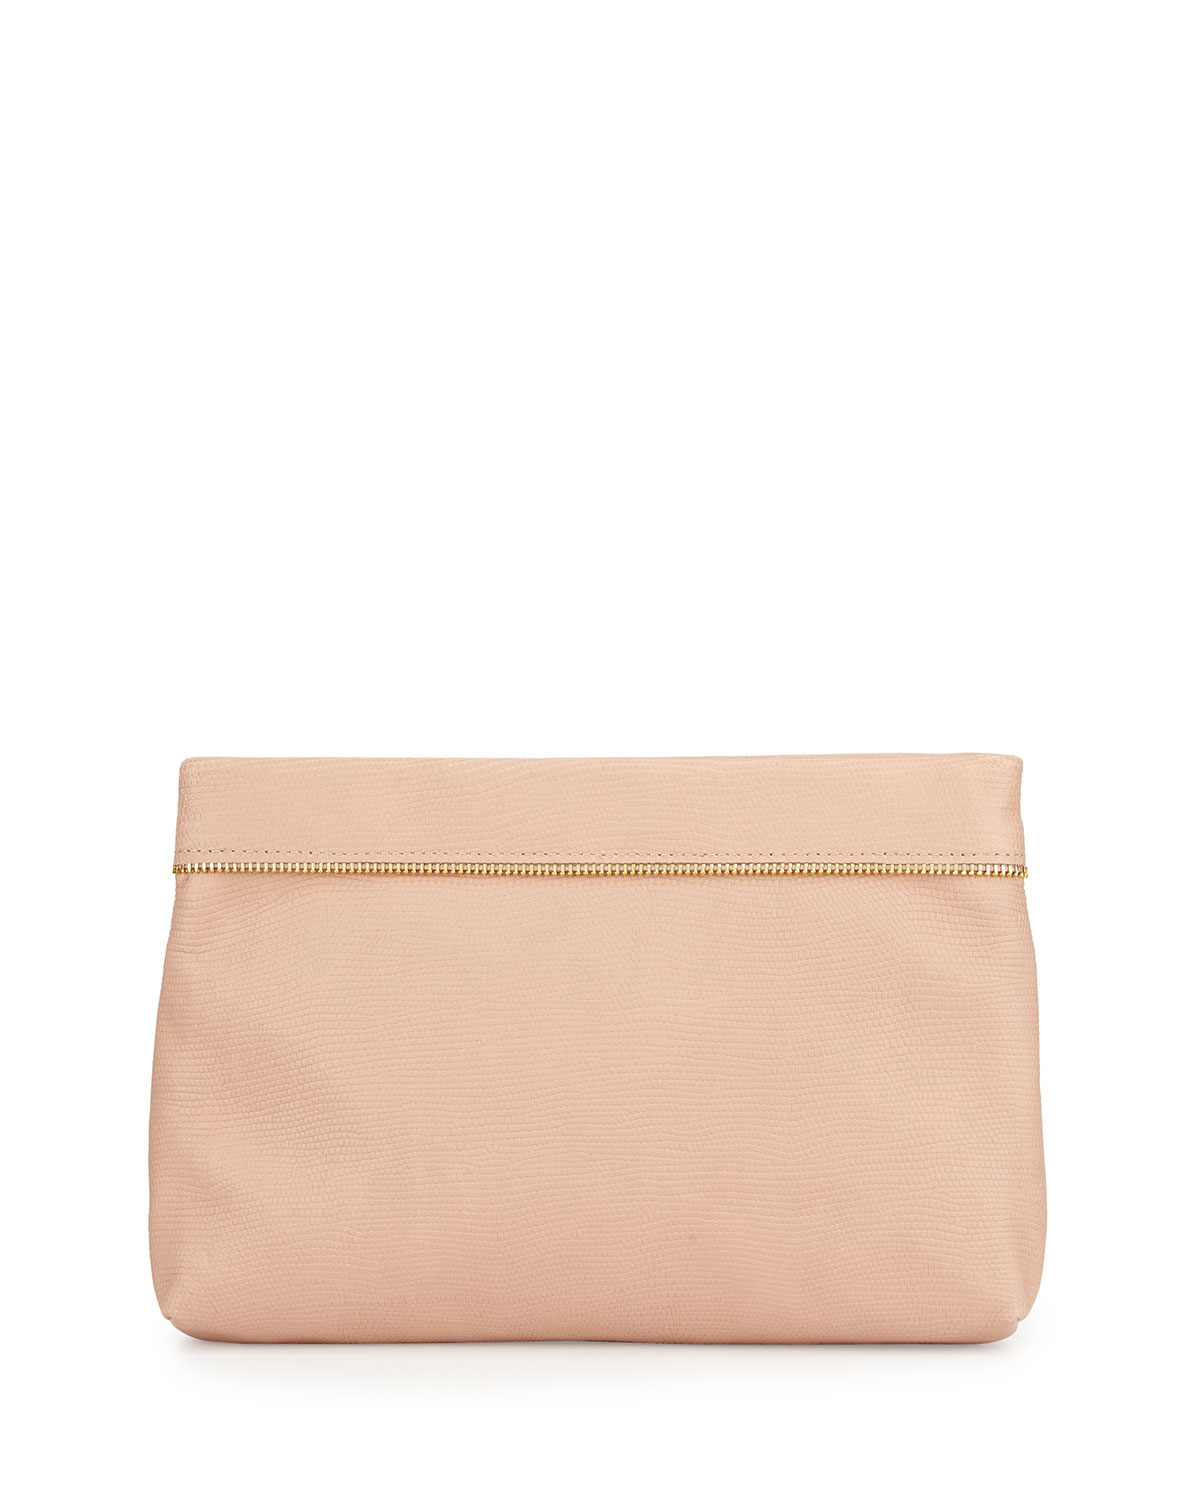 Lauren Merkin Paige Leather Clutch Bag in Pink (blush)